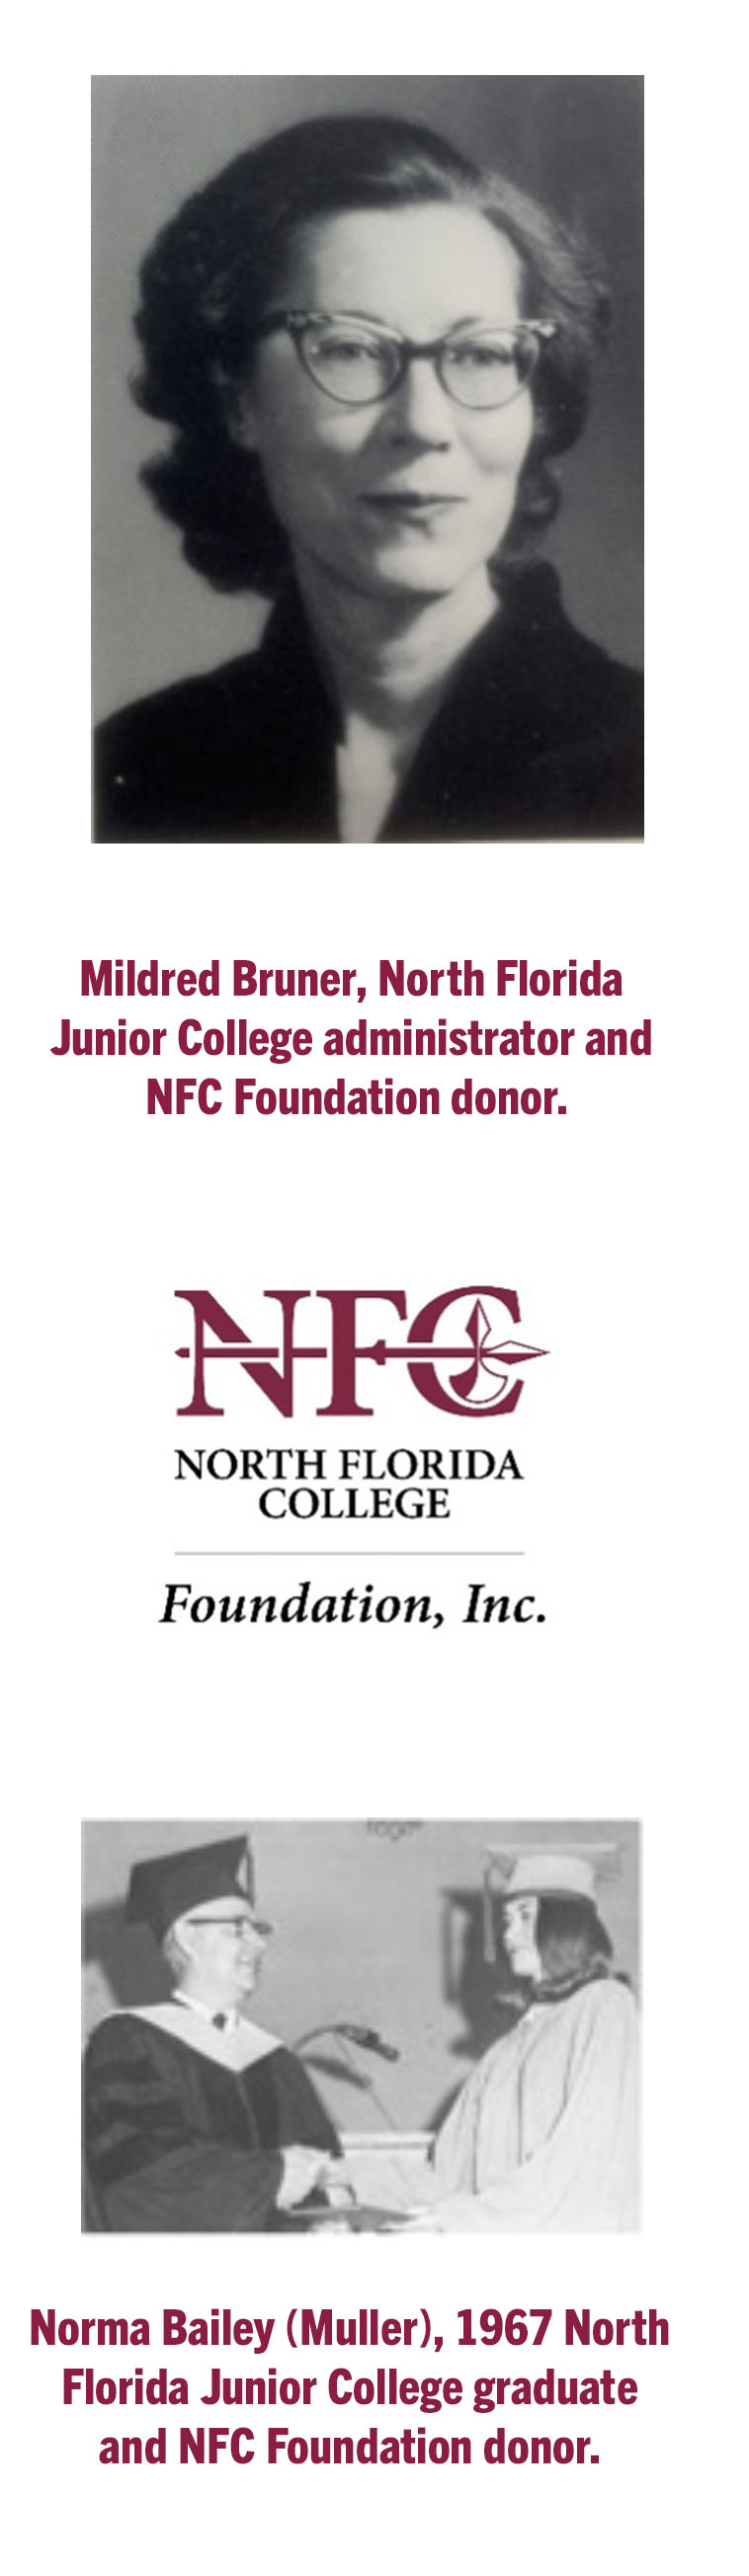 NFJC Alumni